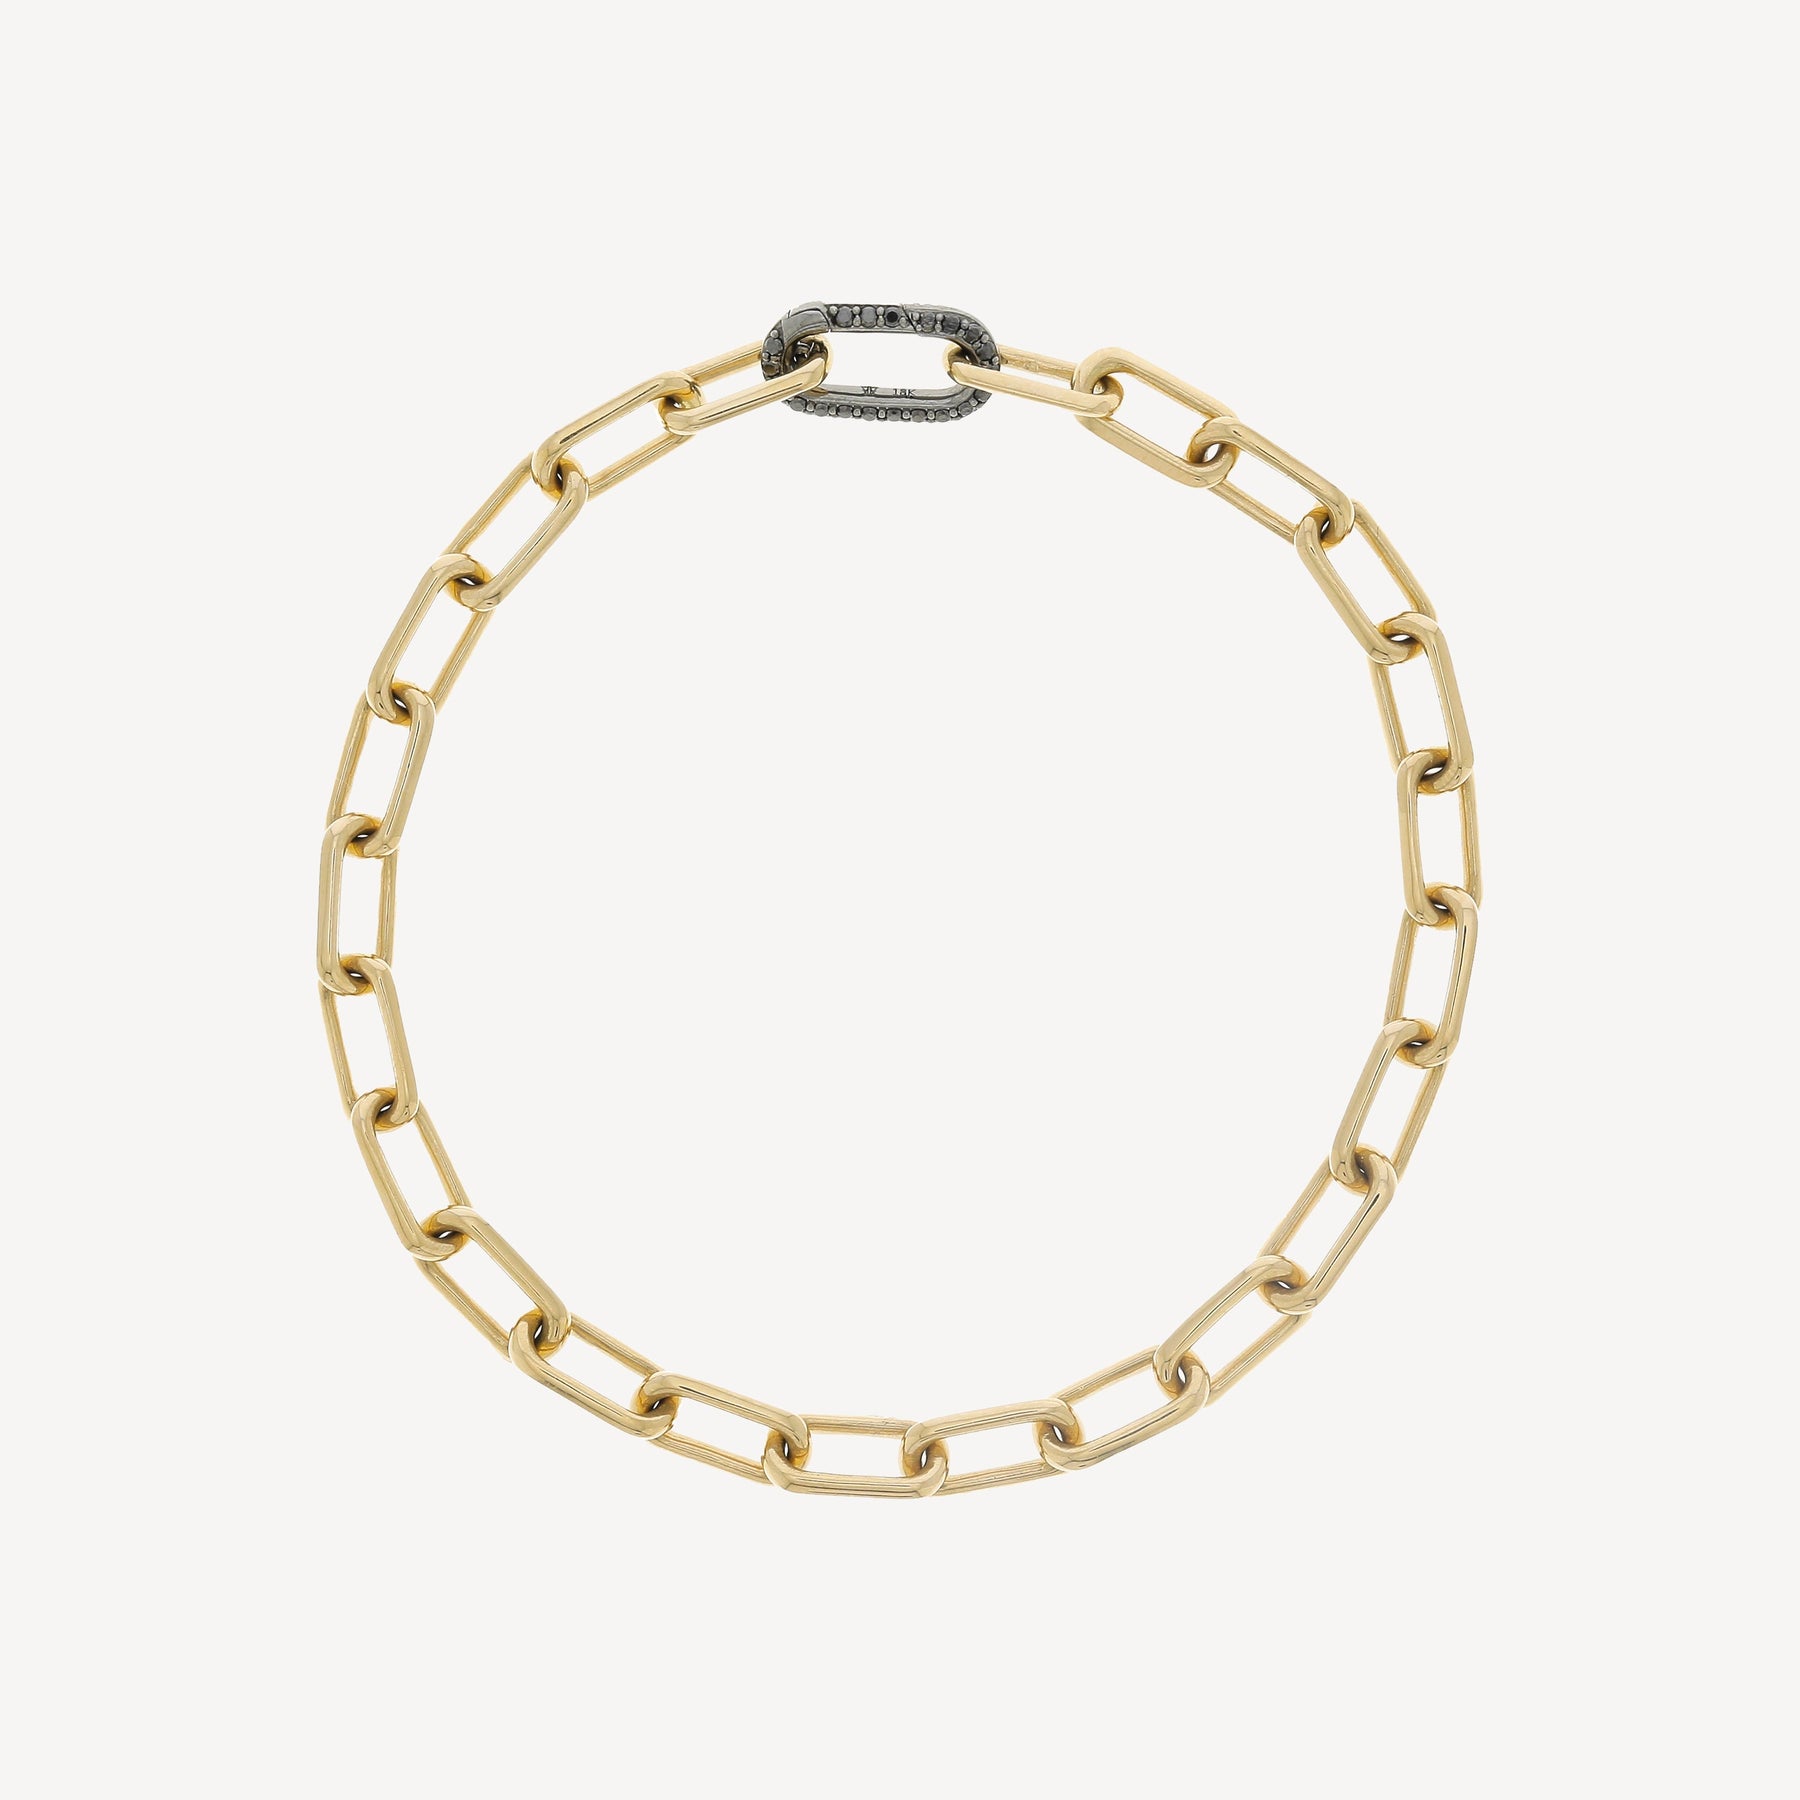 Saxon Gold and Black Diamond Link Bracelet